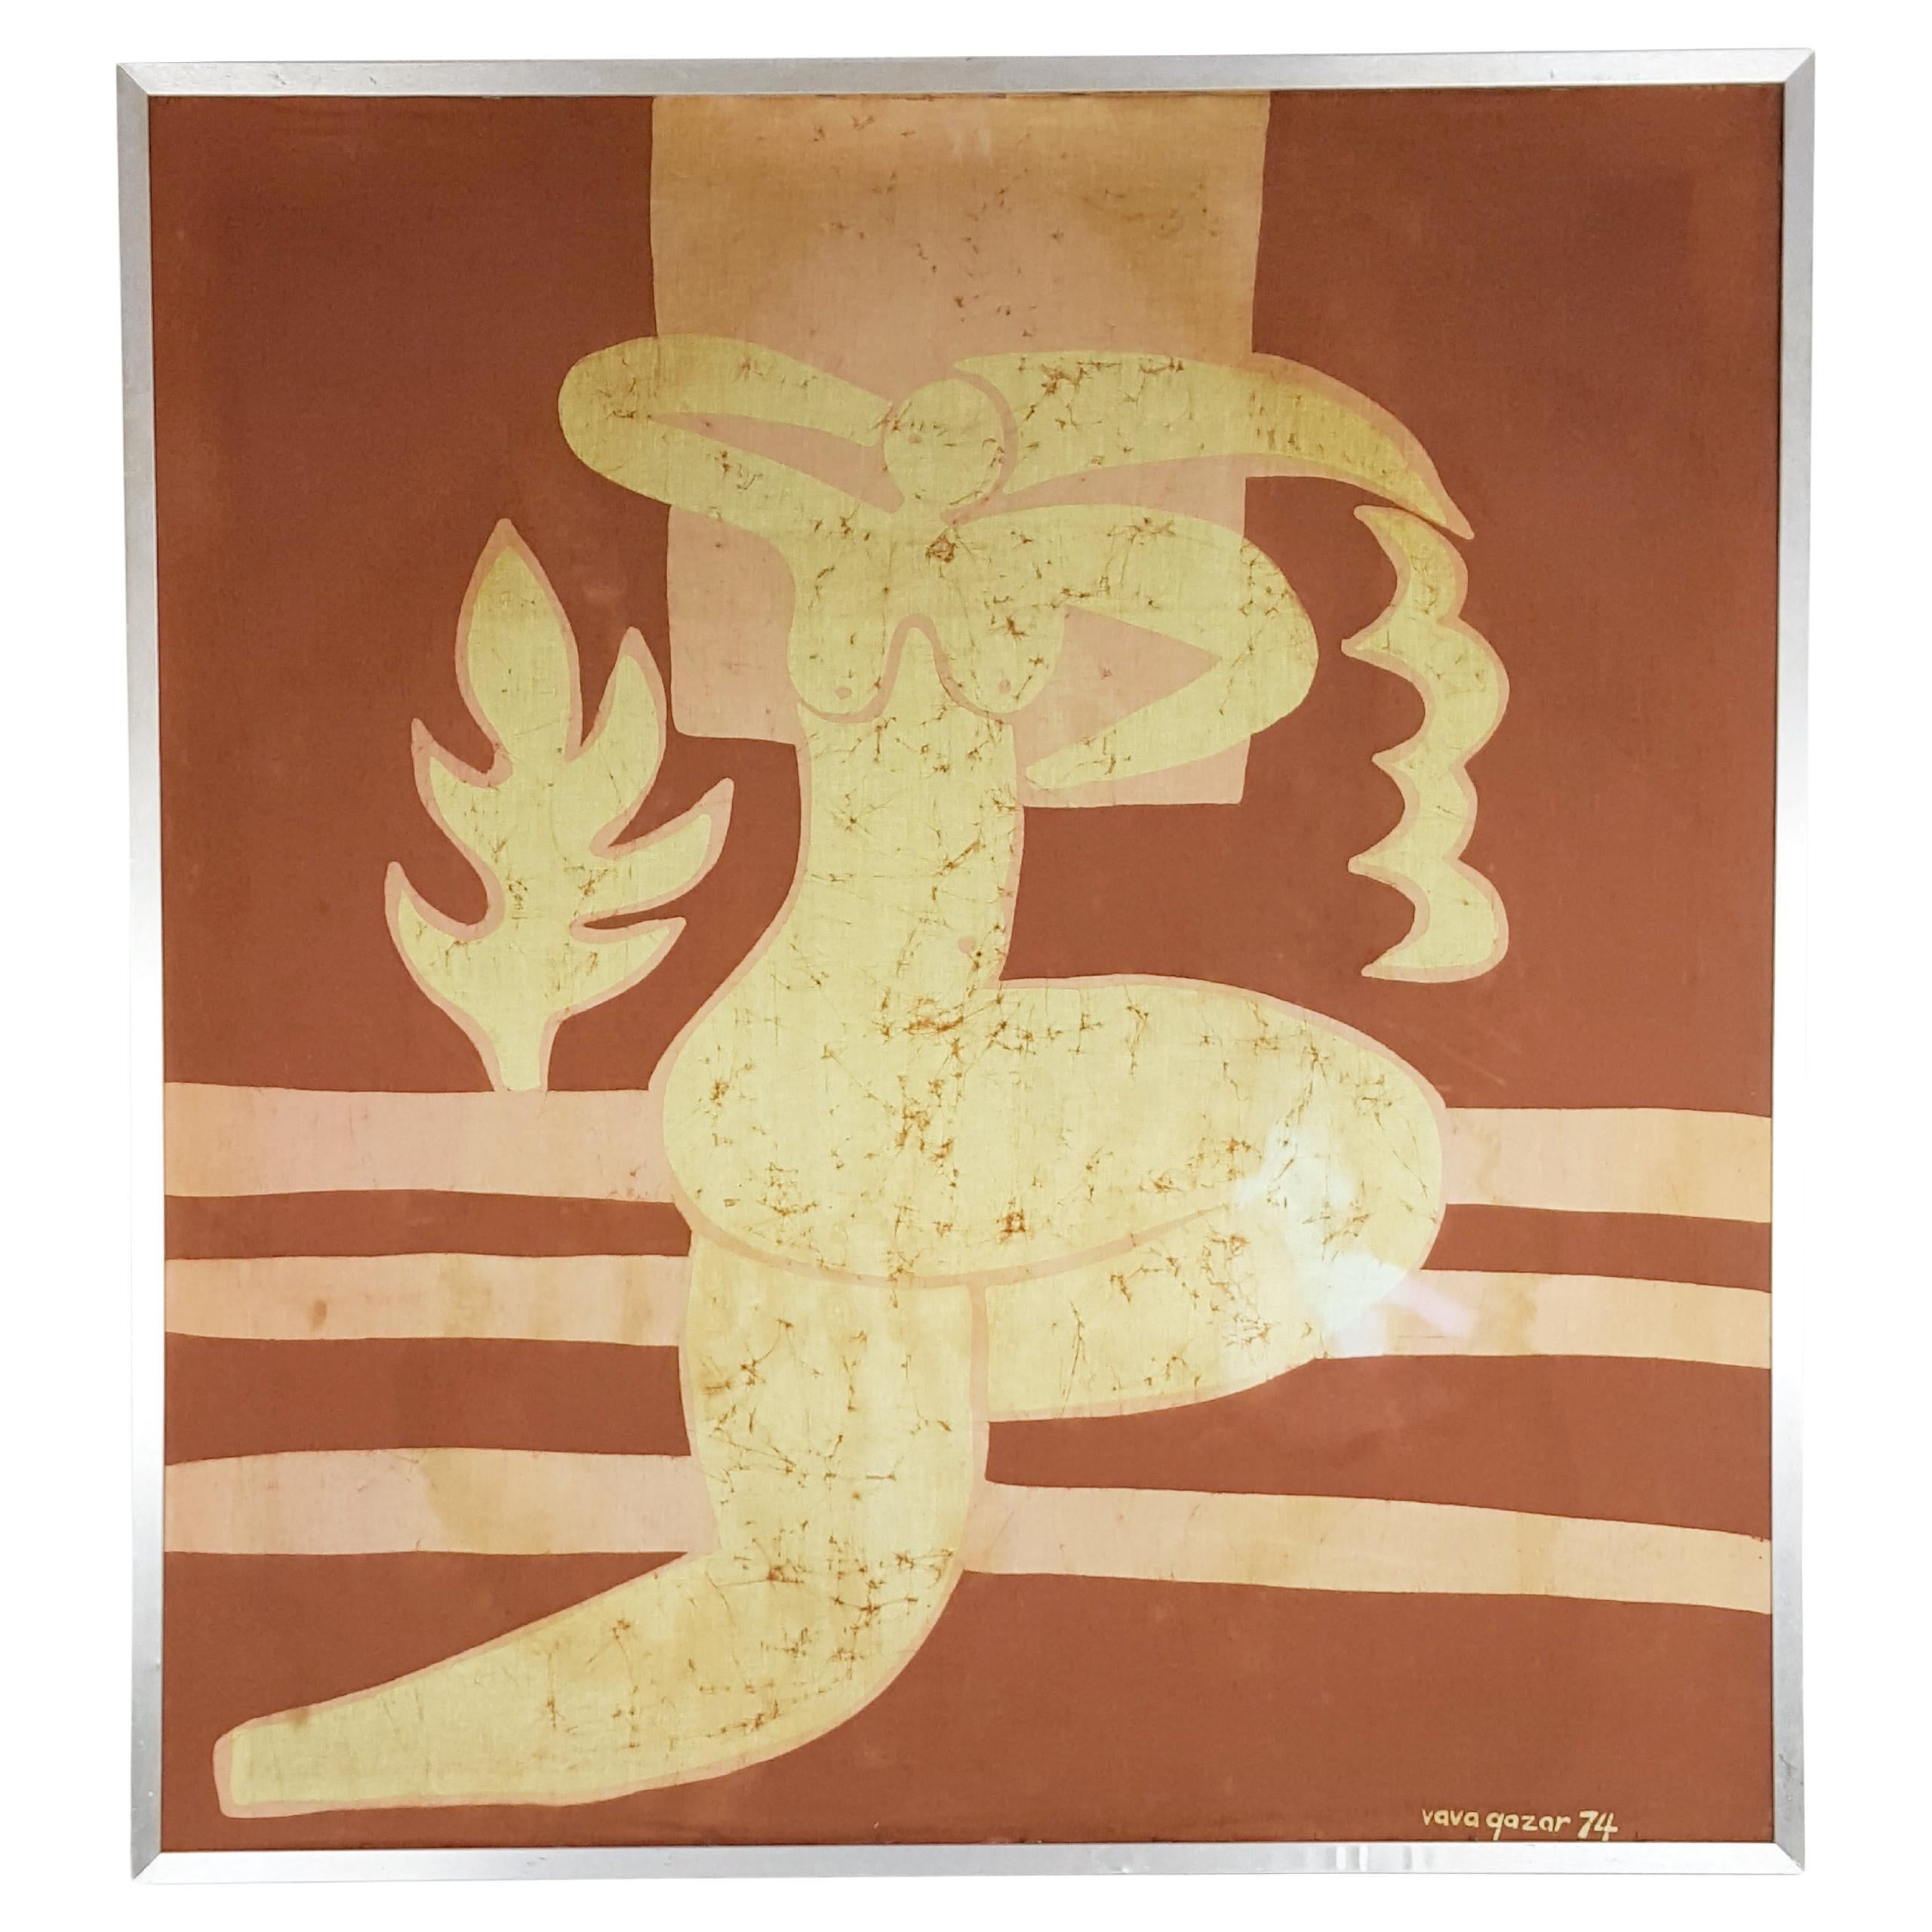 Painted fabric with batik technique by Vava Quazar, 1974